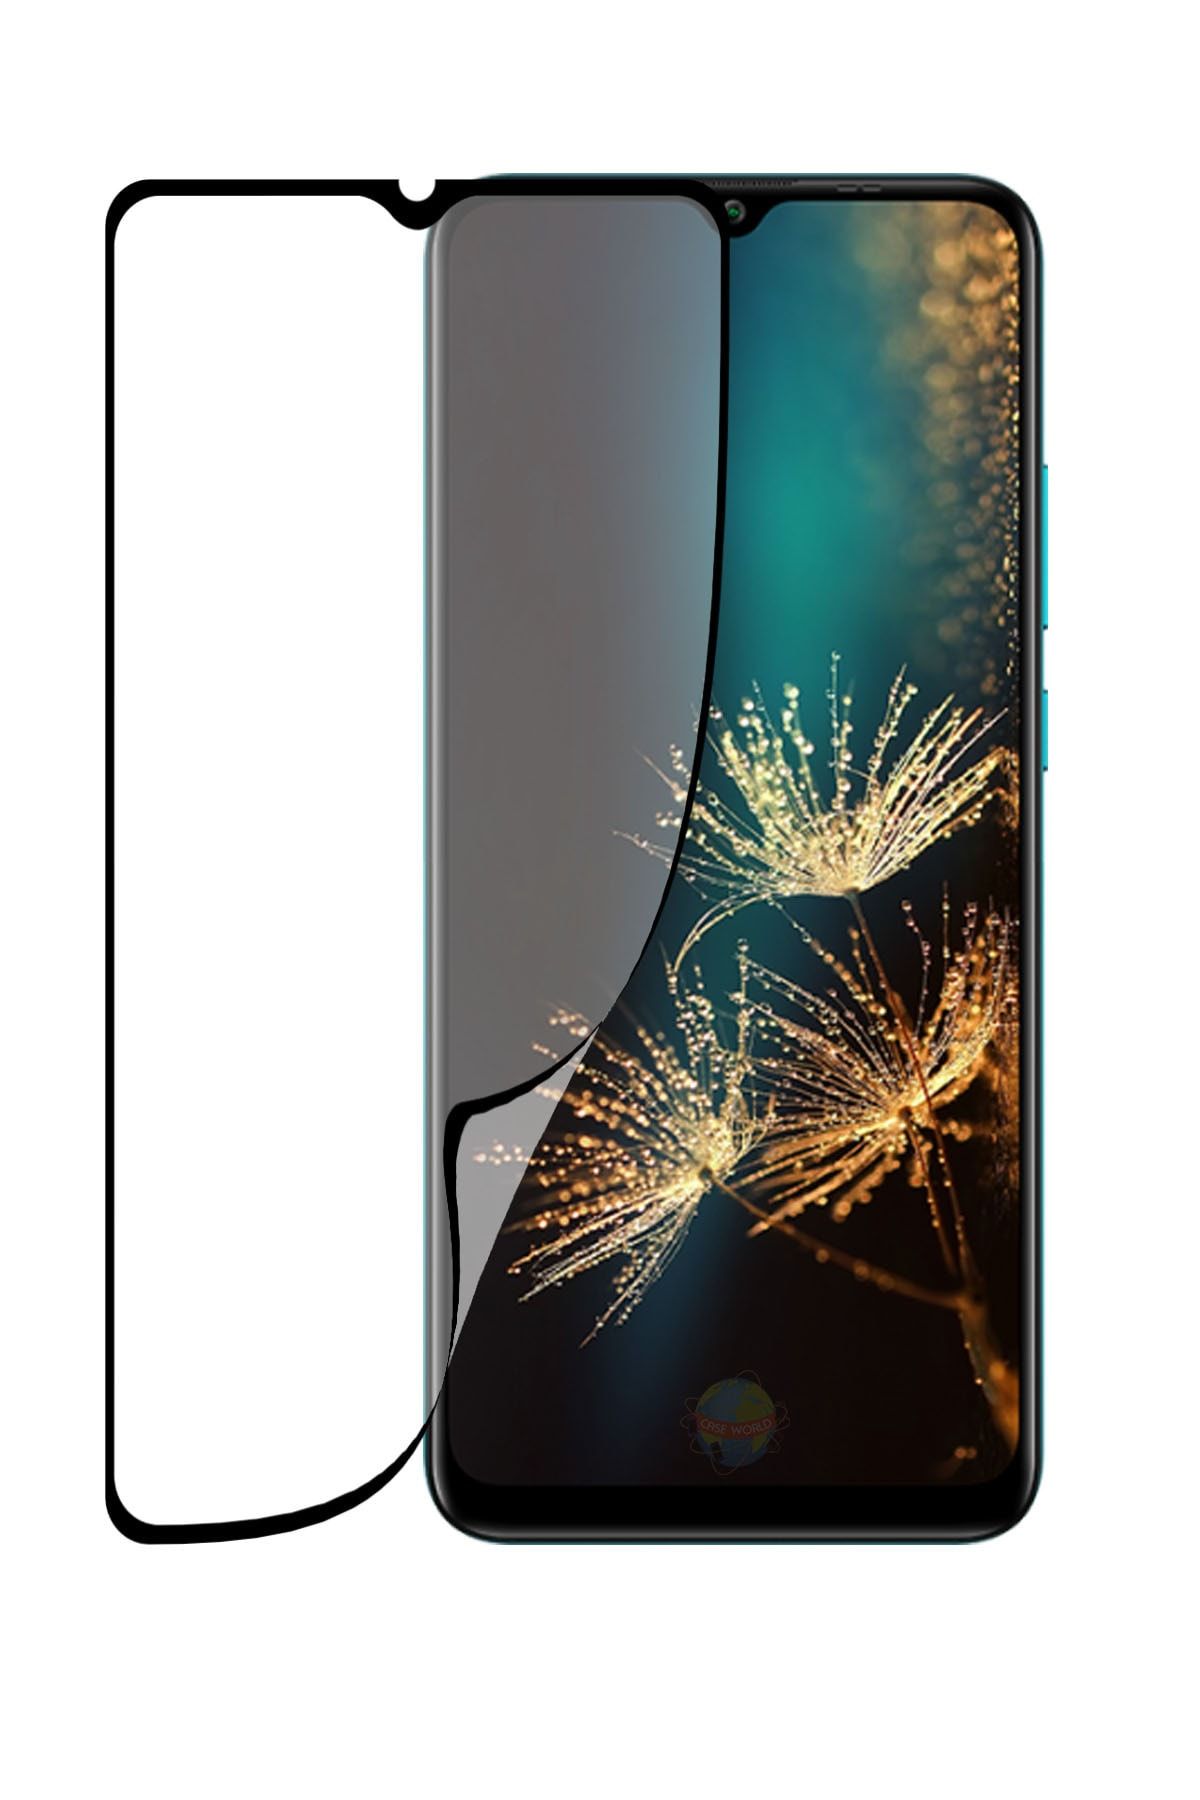 CaseWorld General Mobile Gm21 Plus Uyumlu Fiber Nano Tam Kaplayan Ekran Koruyucu Cam